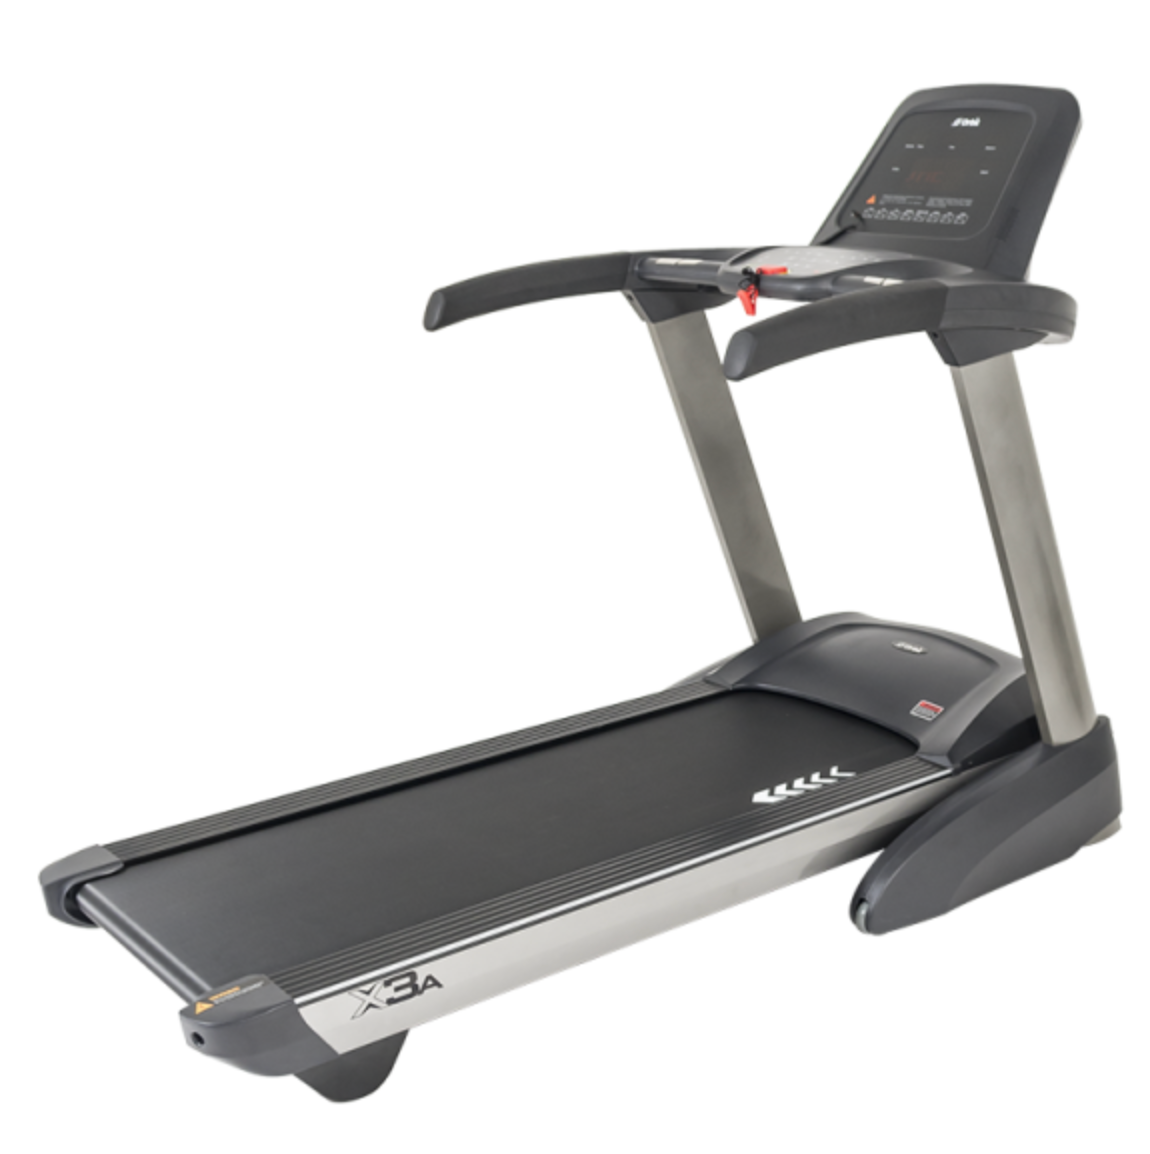 Skyline X3A Treadmill - 2 HP - Fitness Hero Brand new